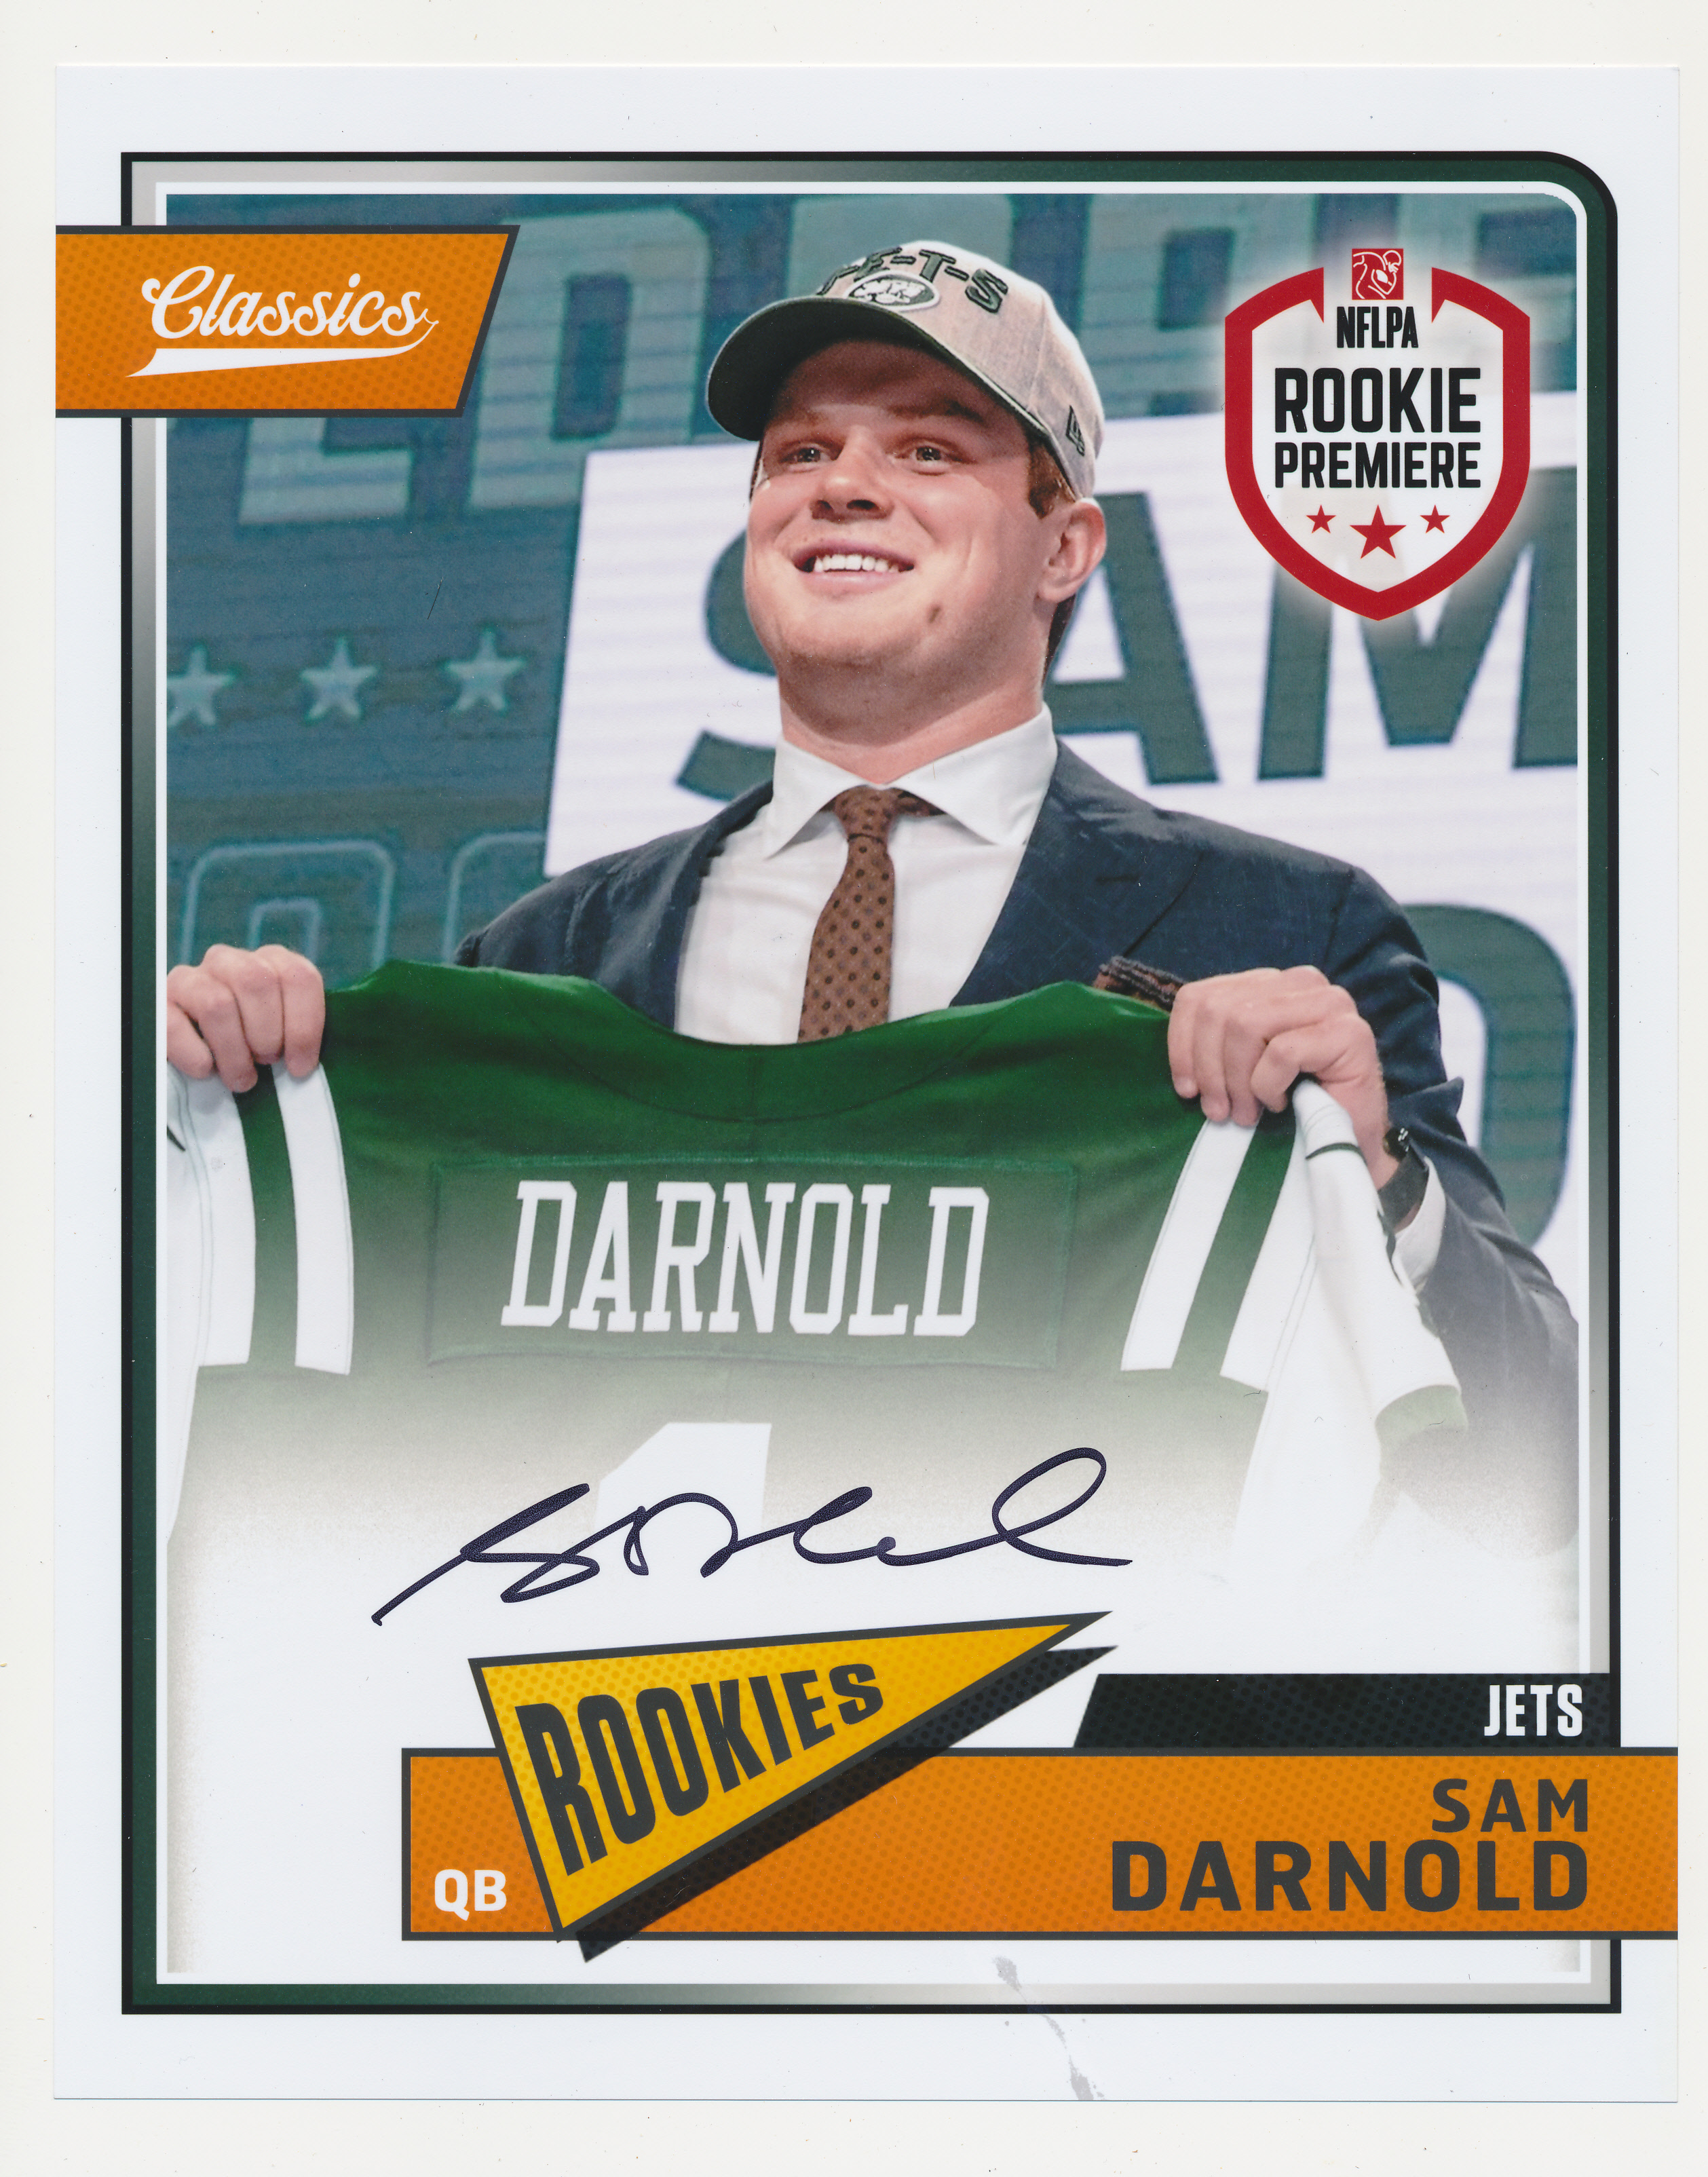 2018 Panini Rookie Premier Sam Darnold 8x10 Autograph Jets